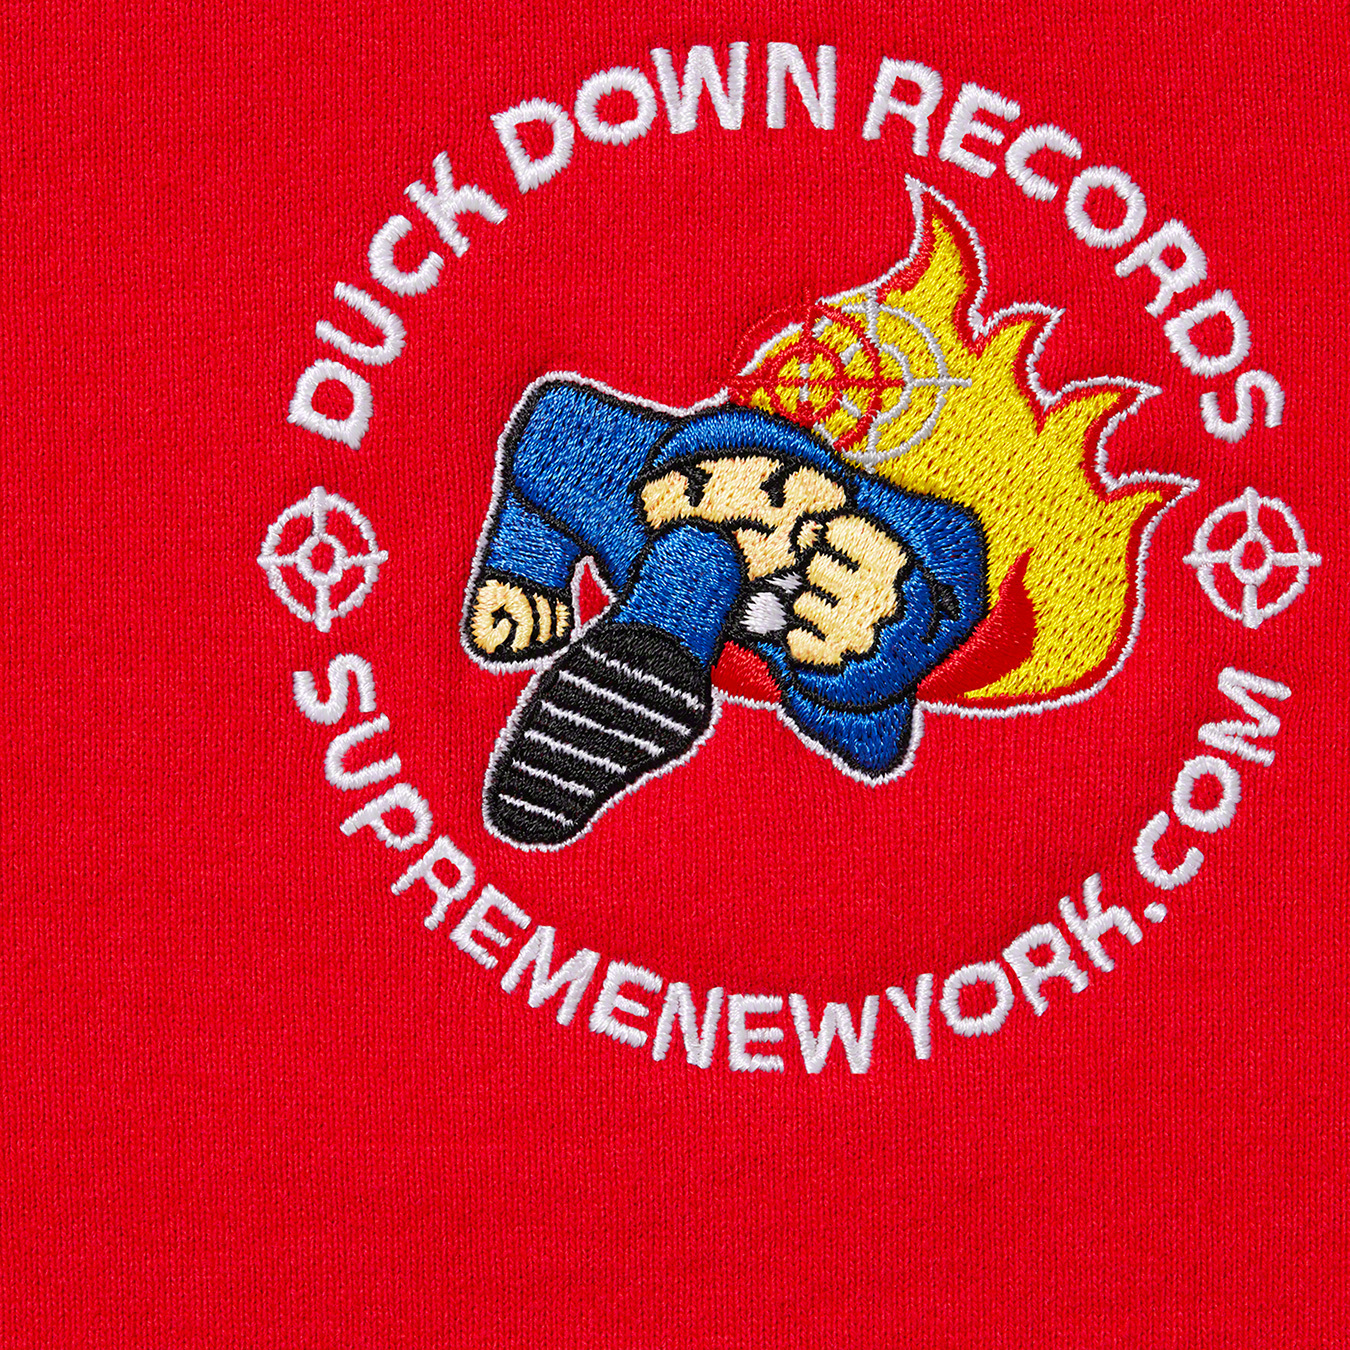 Duck Down Records Hooded Sweatshirt